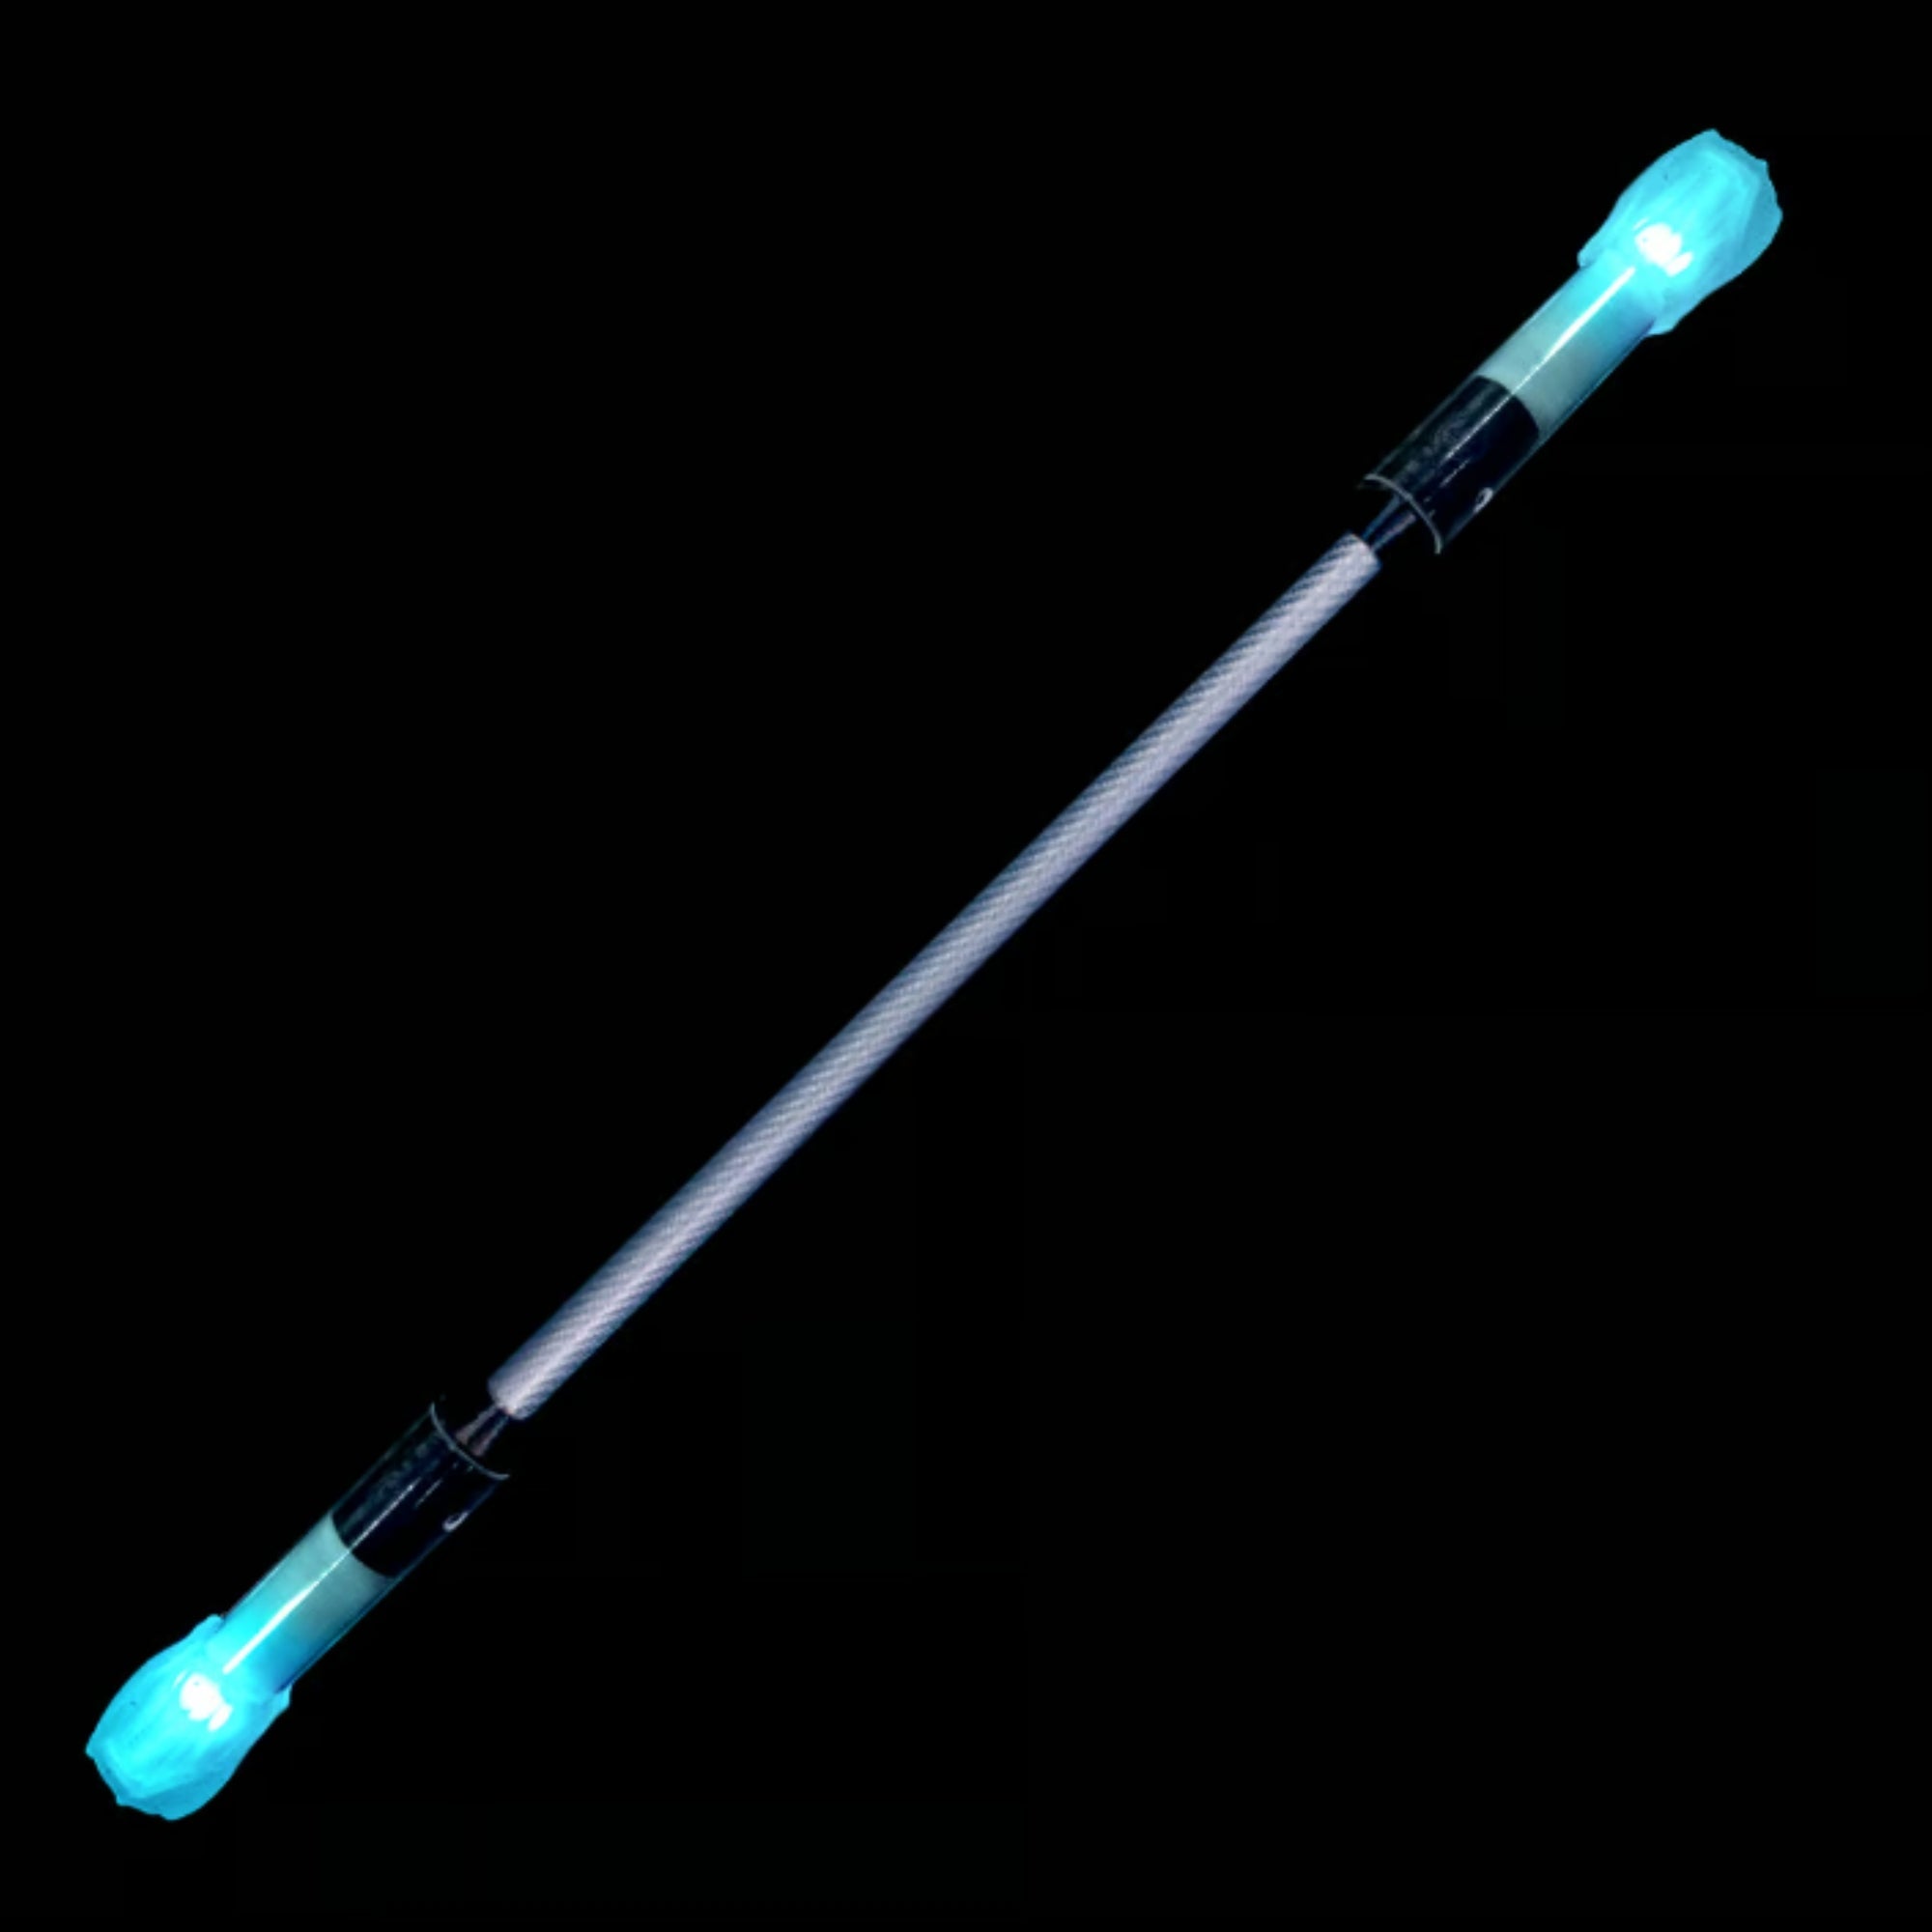 baton glowing blue at each end